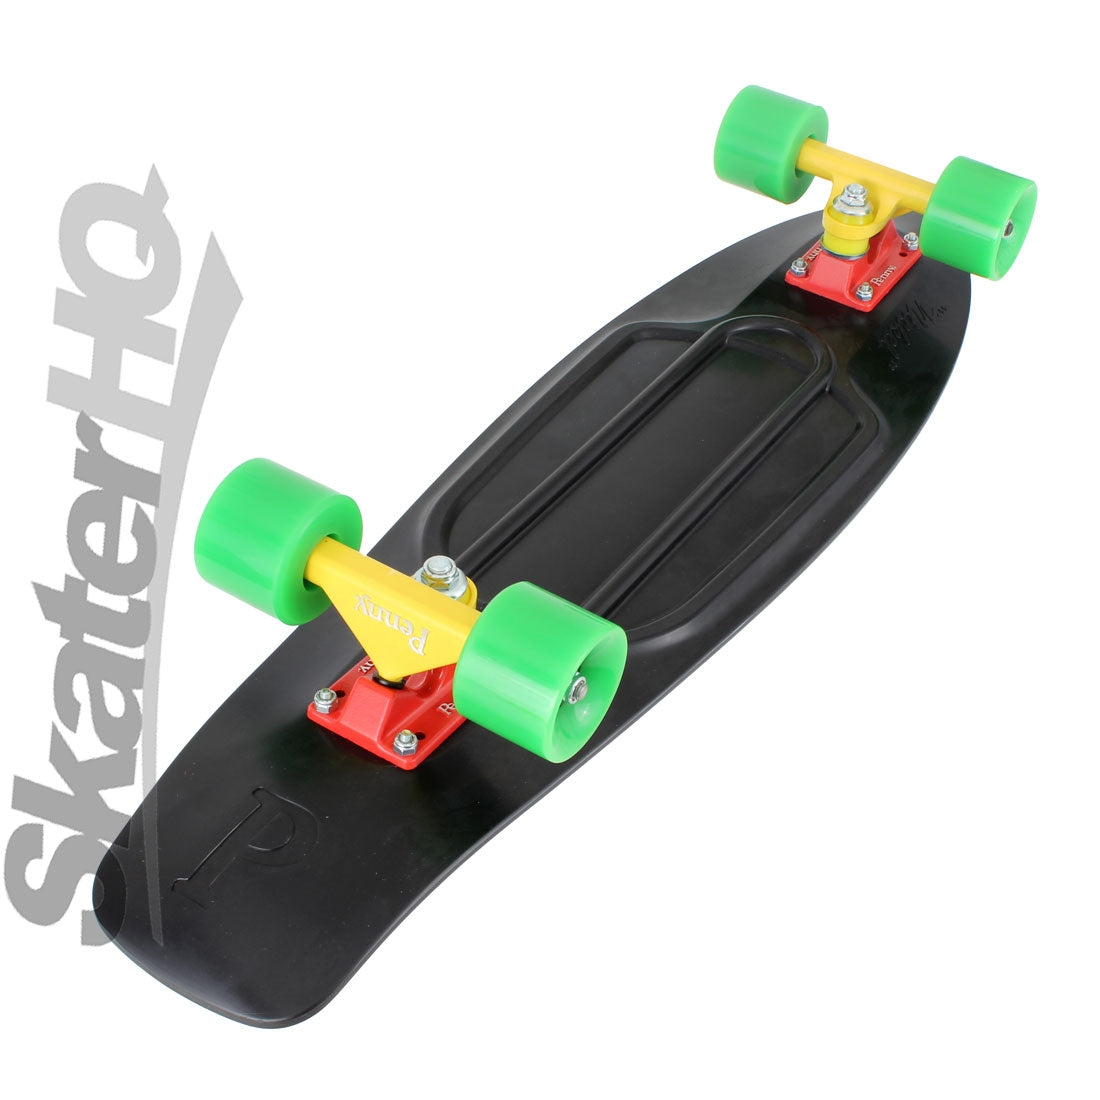 Penny 27 Nickel Complete - Reggae Skateboard Compl Cruisers